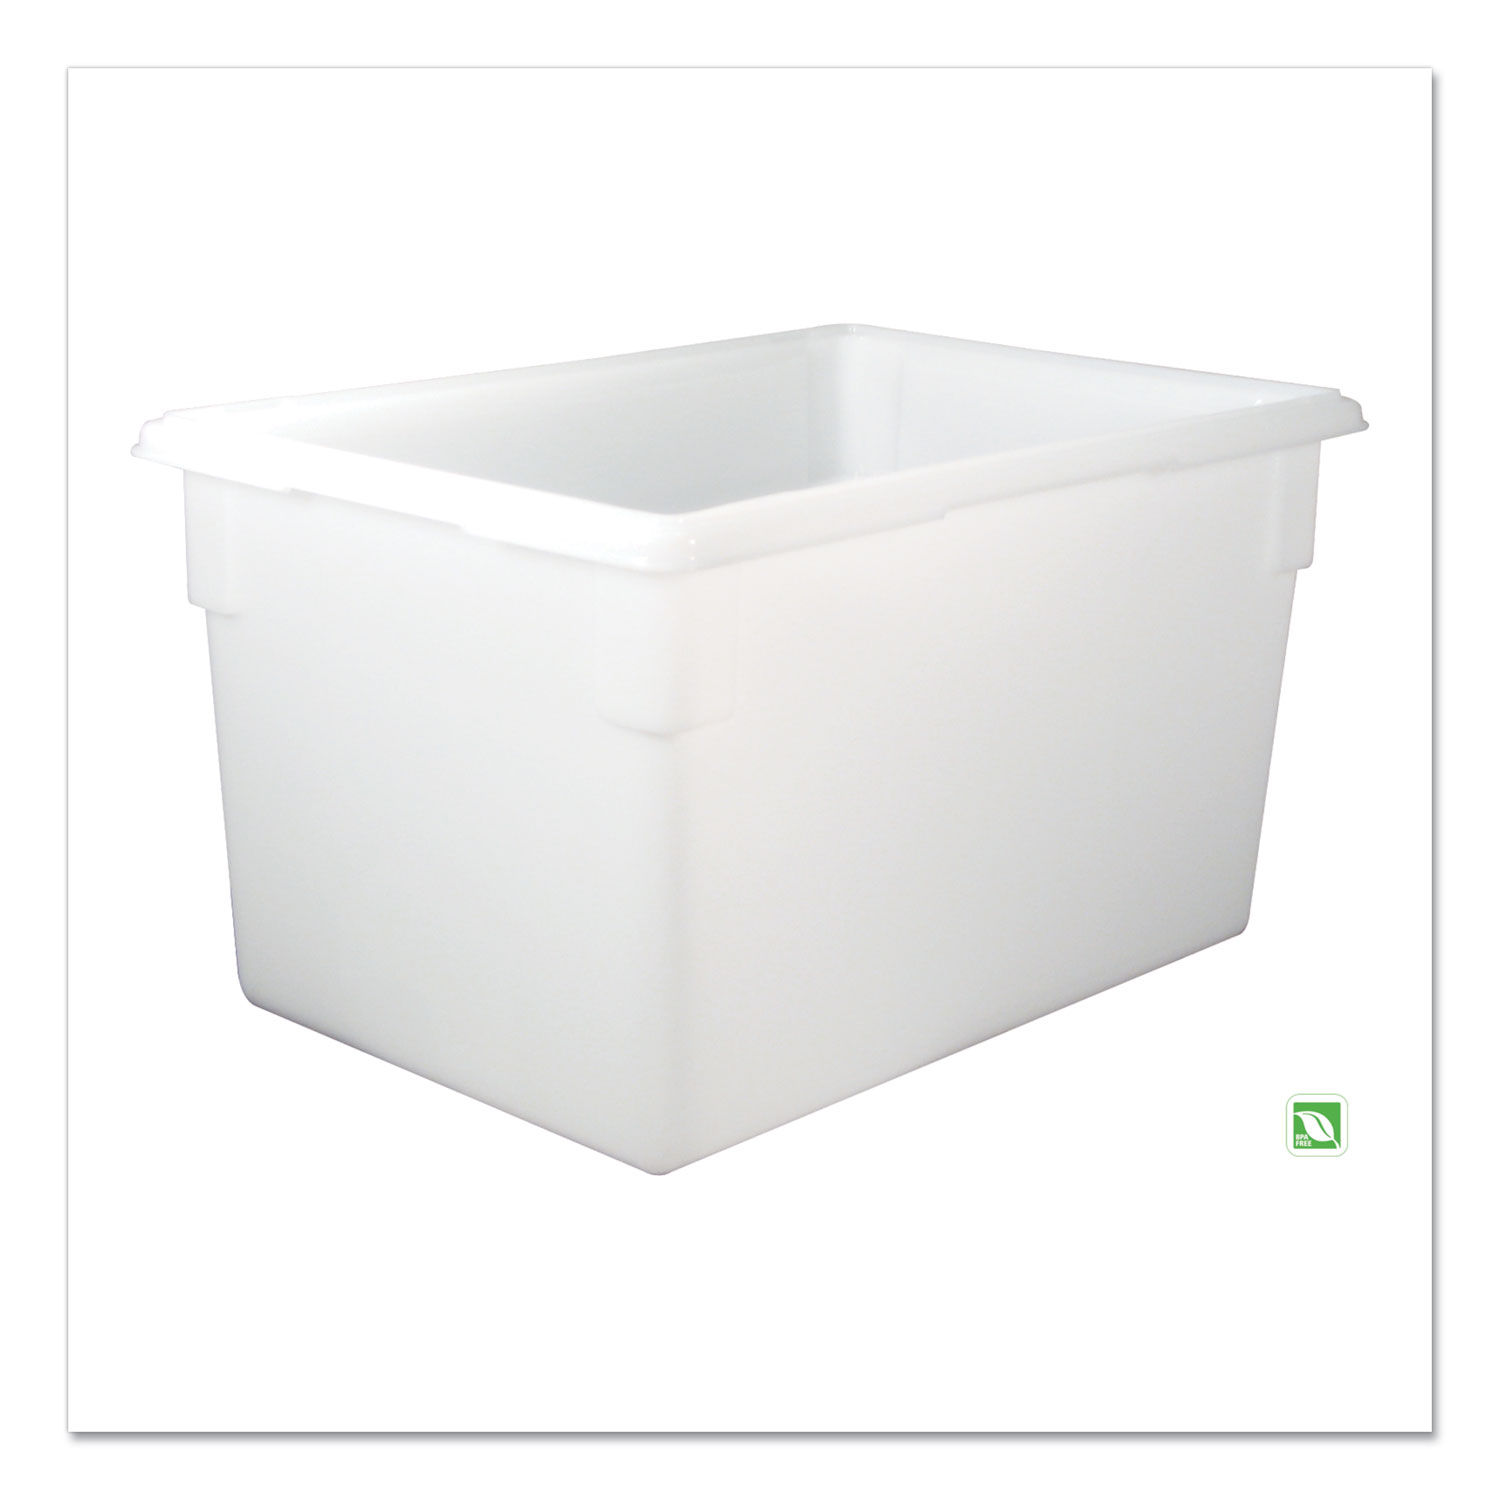 Rubbermaid 1776350 Liquid Storage Container 1 pt White White